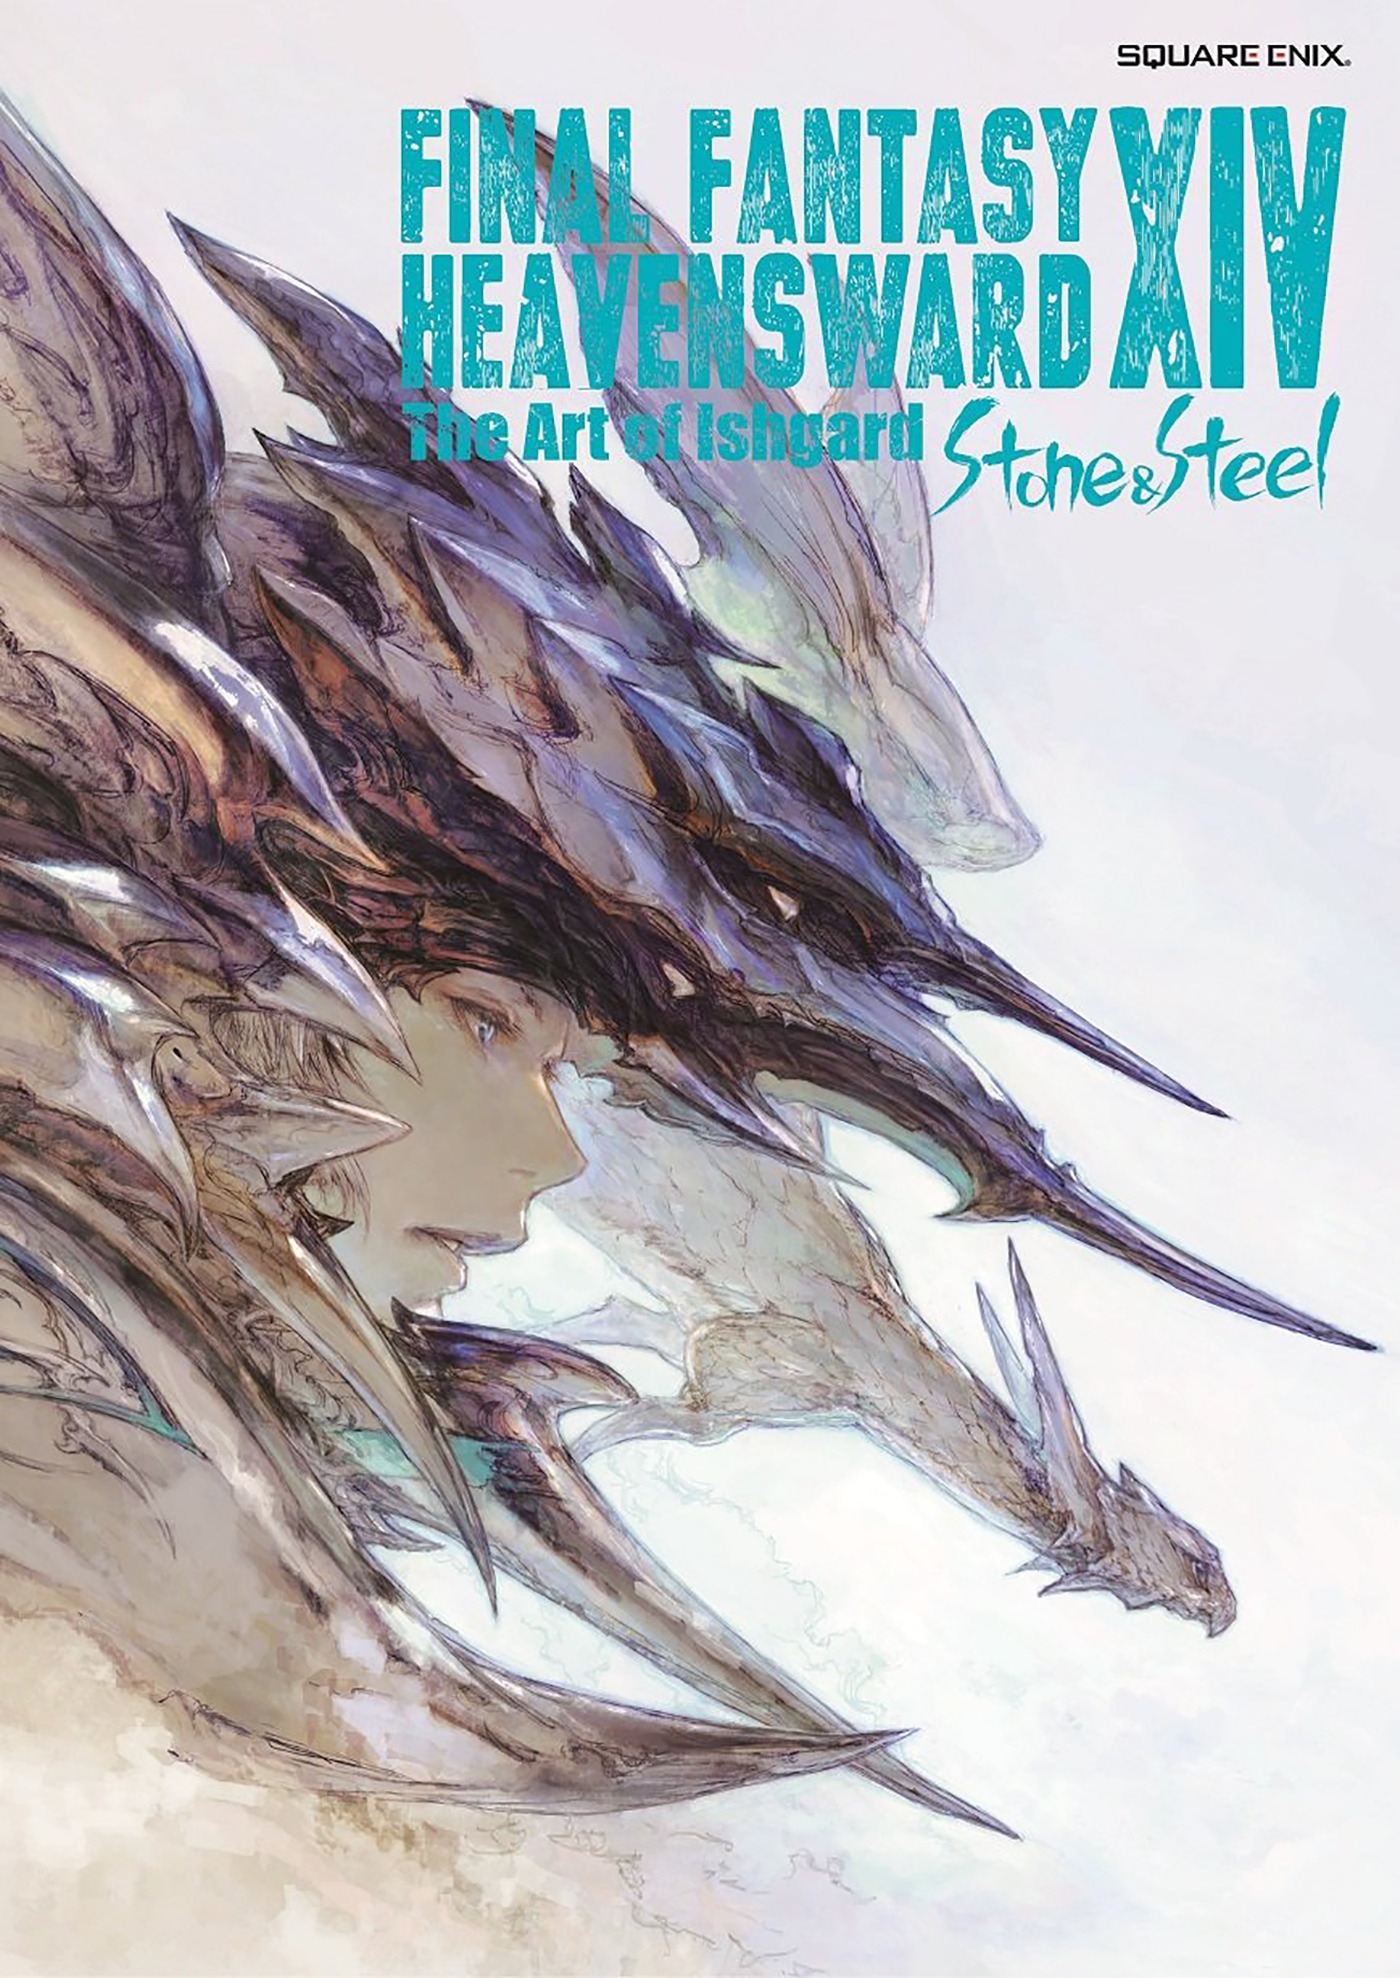  Final  Fantasy  XIV Heavensward The Art  of Ishgard 